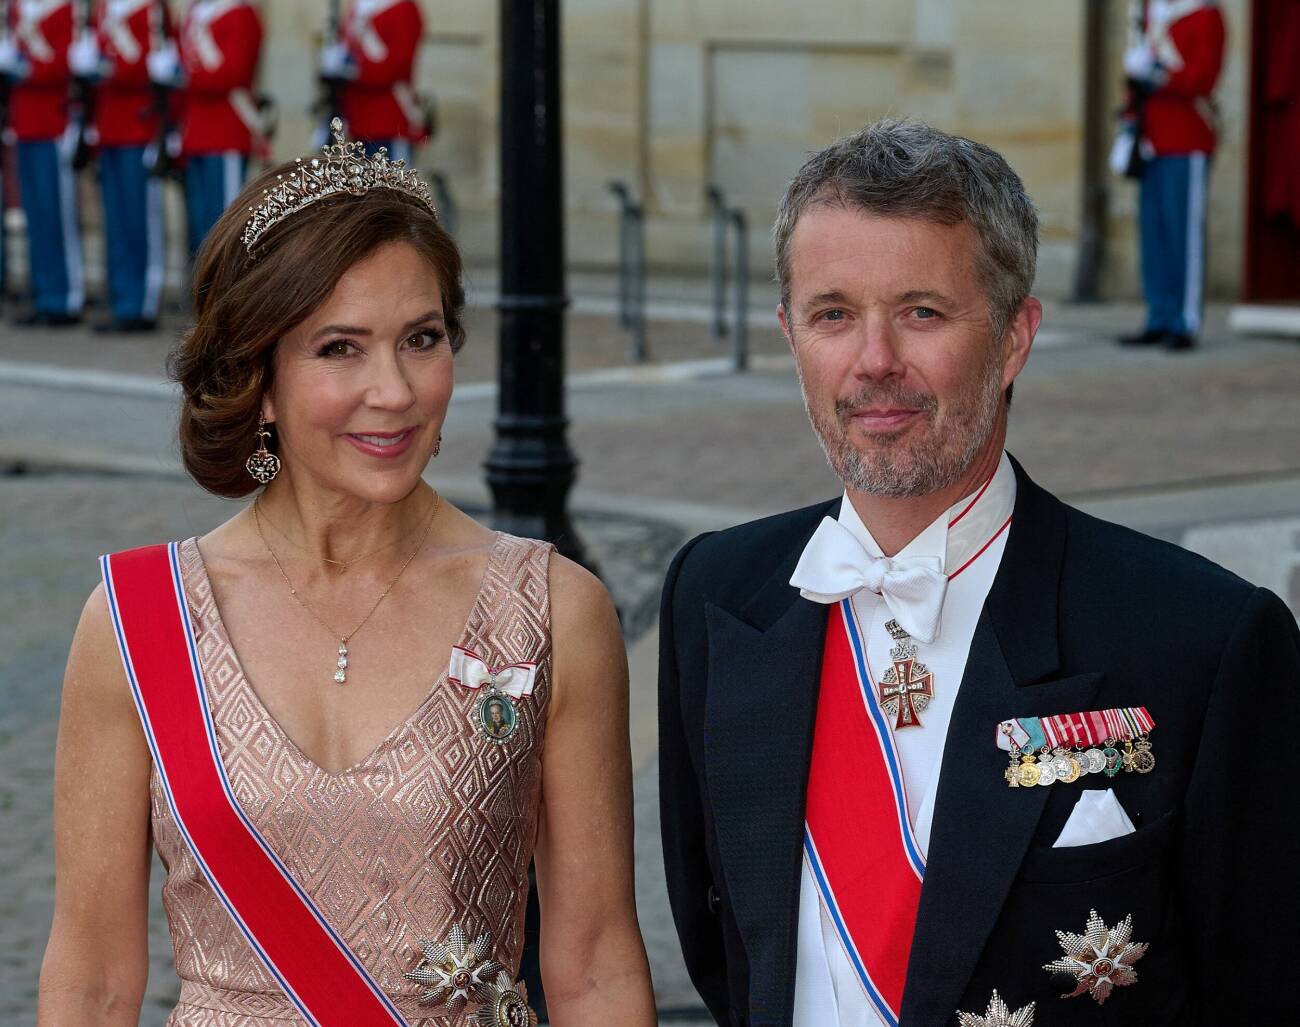 Kronprinsessan Mary och kronprins Fredrik